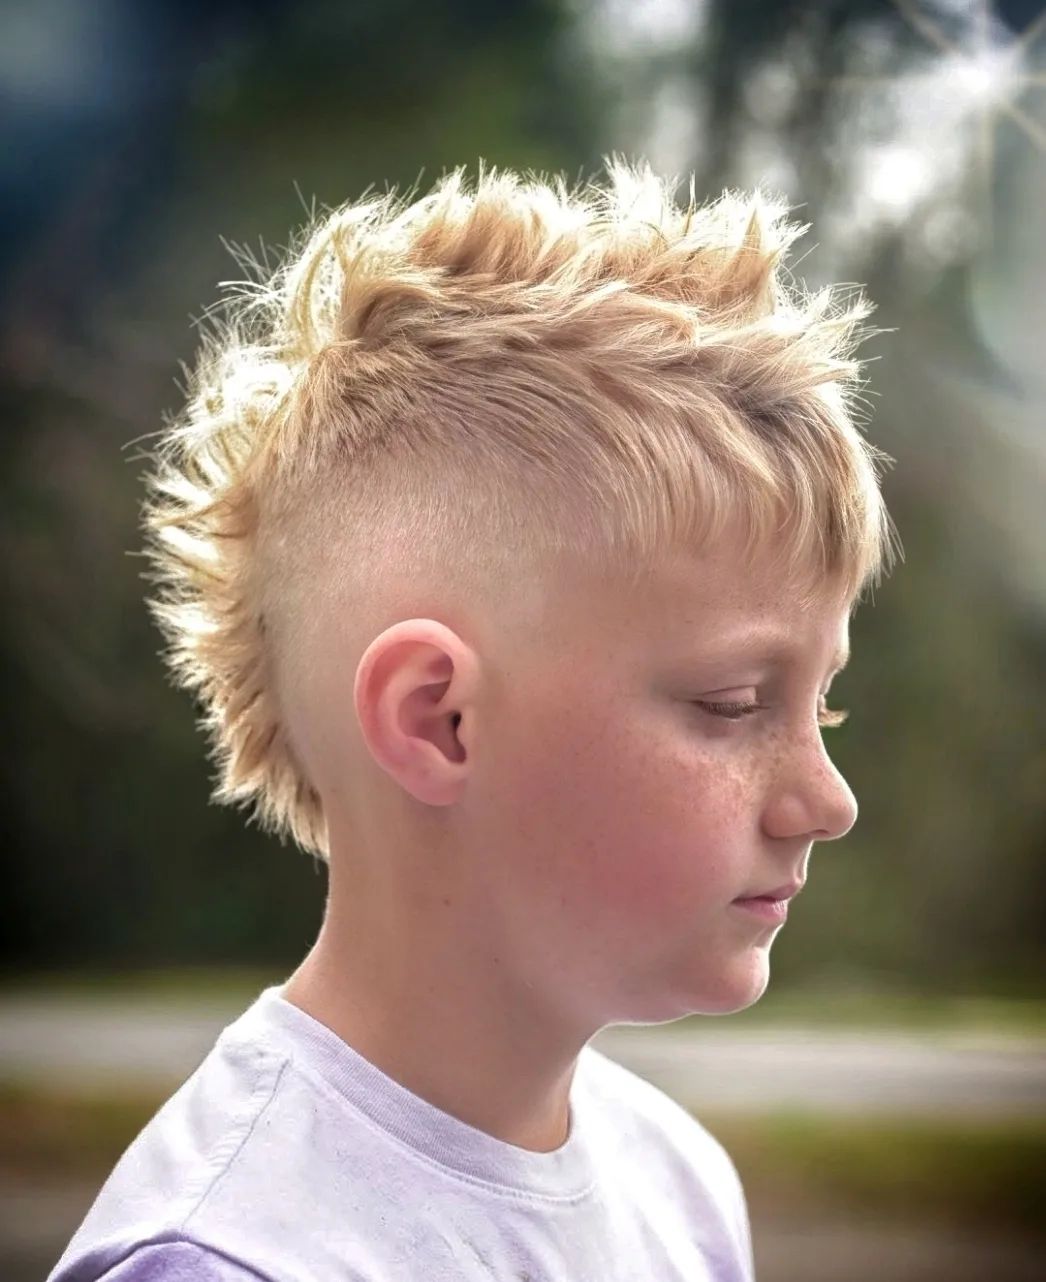 Mohawk haircut for boys